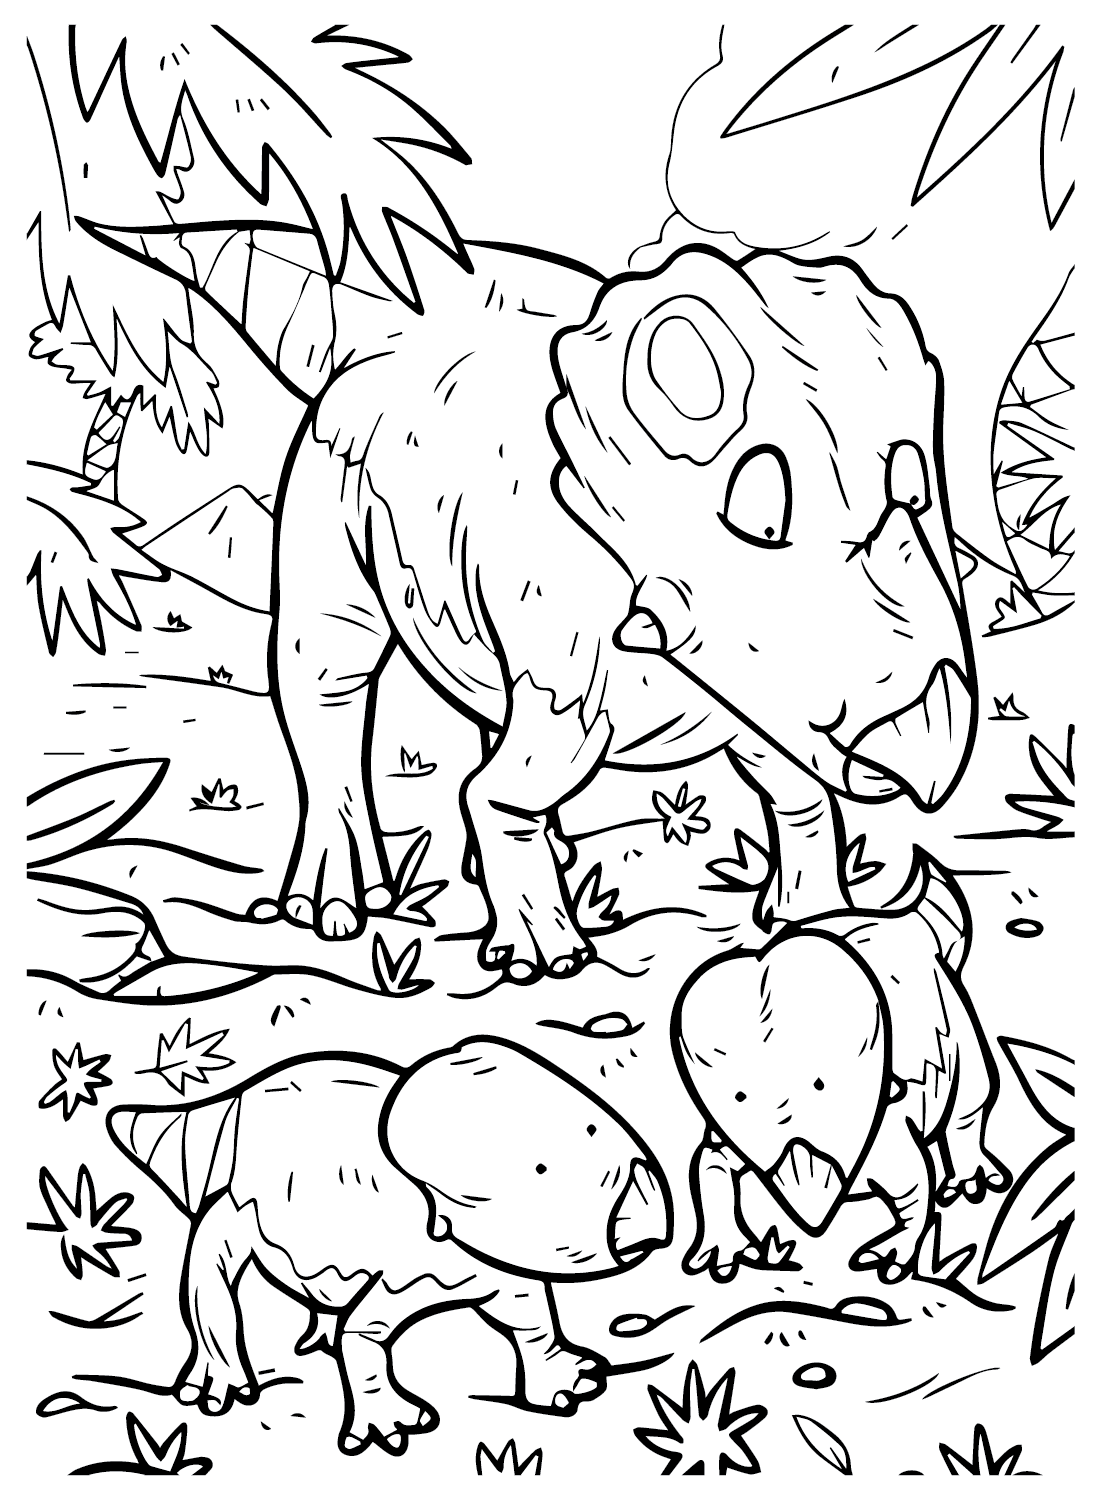 Protoceratops Bilder Malseite von Protoceratops